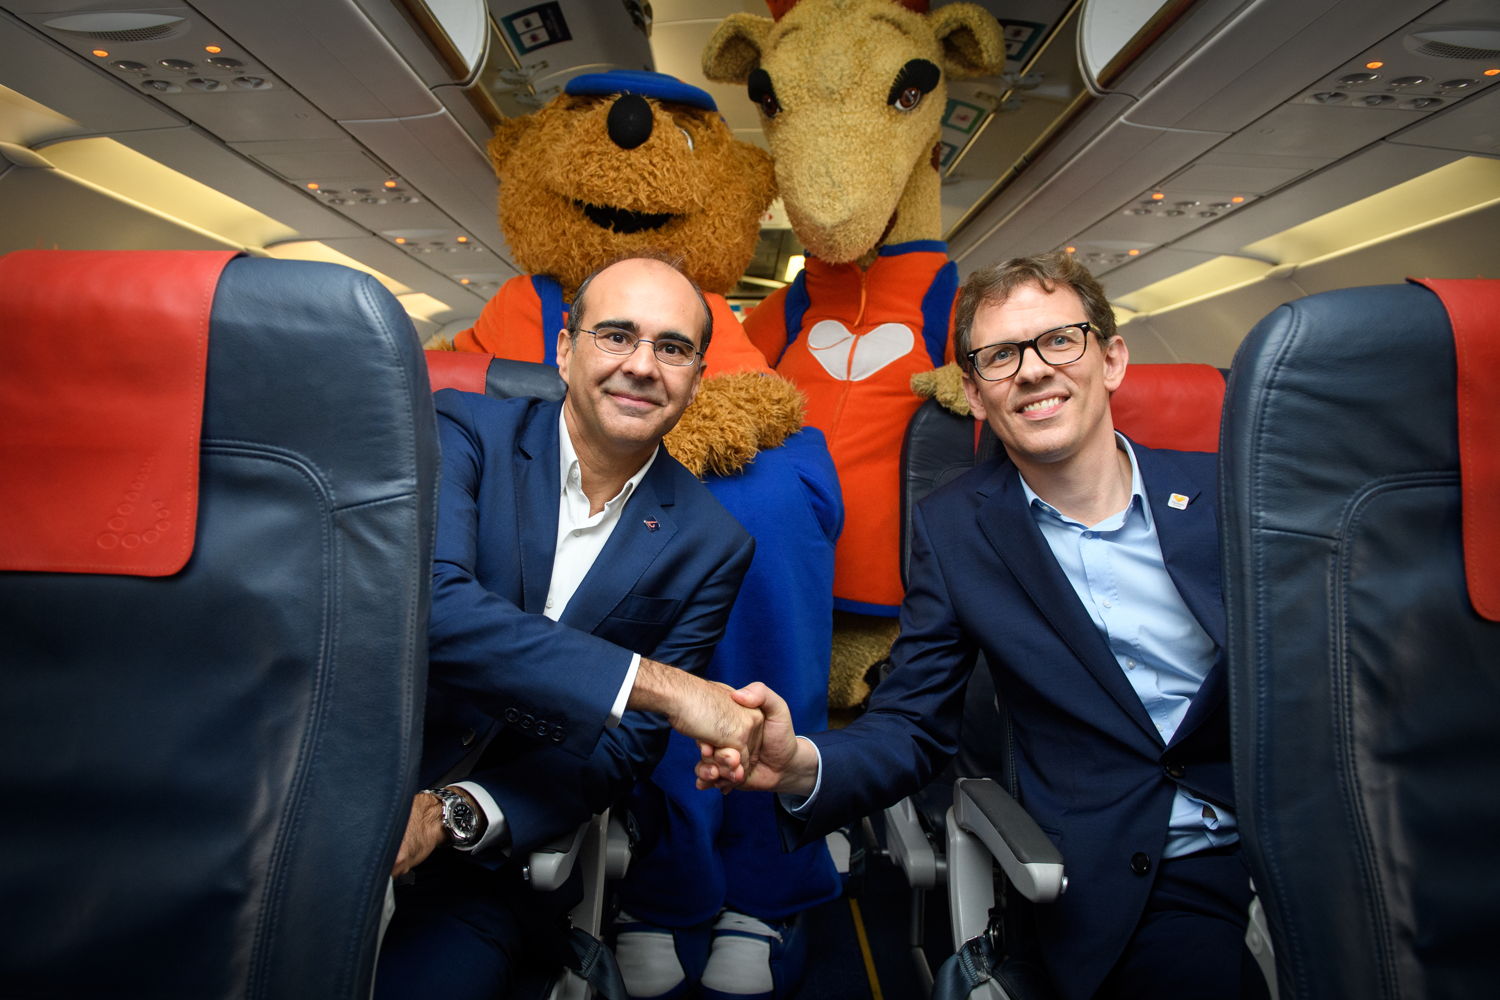 Jan Dekeyser (Neckermann /Thomas Cook) et Bernard Gustin (Brussels Airlines) célèbrent le mariage entre Neckermann/Thomas Cook en Brussels Airlines
